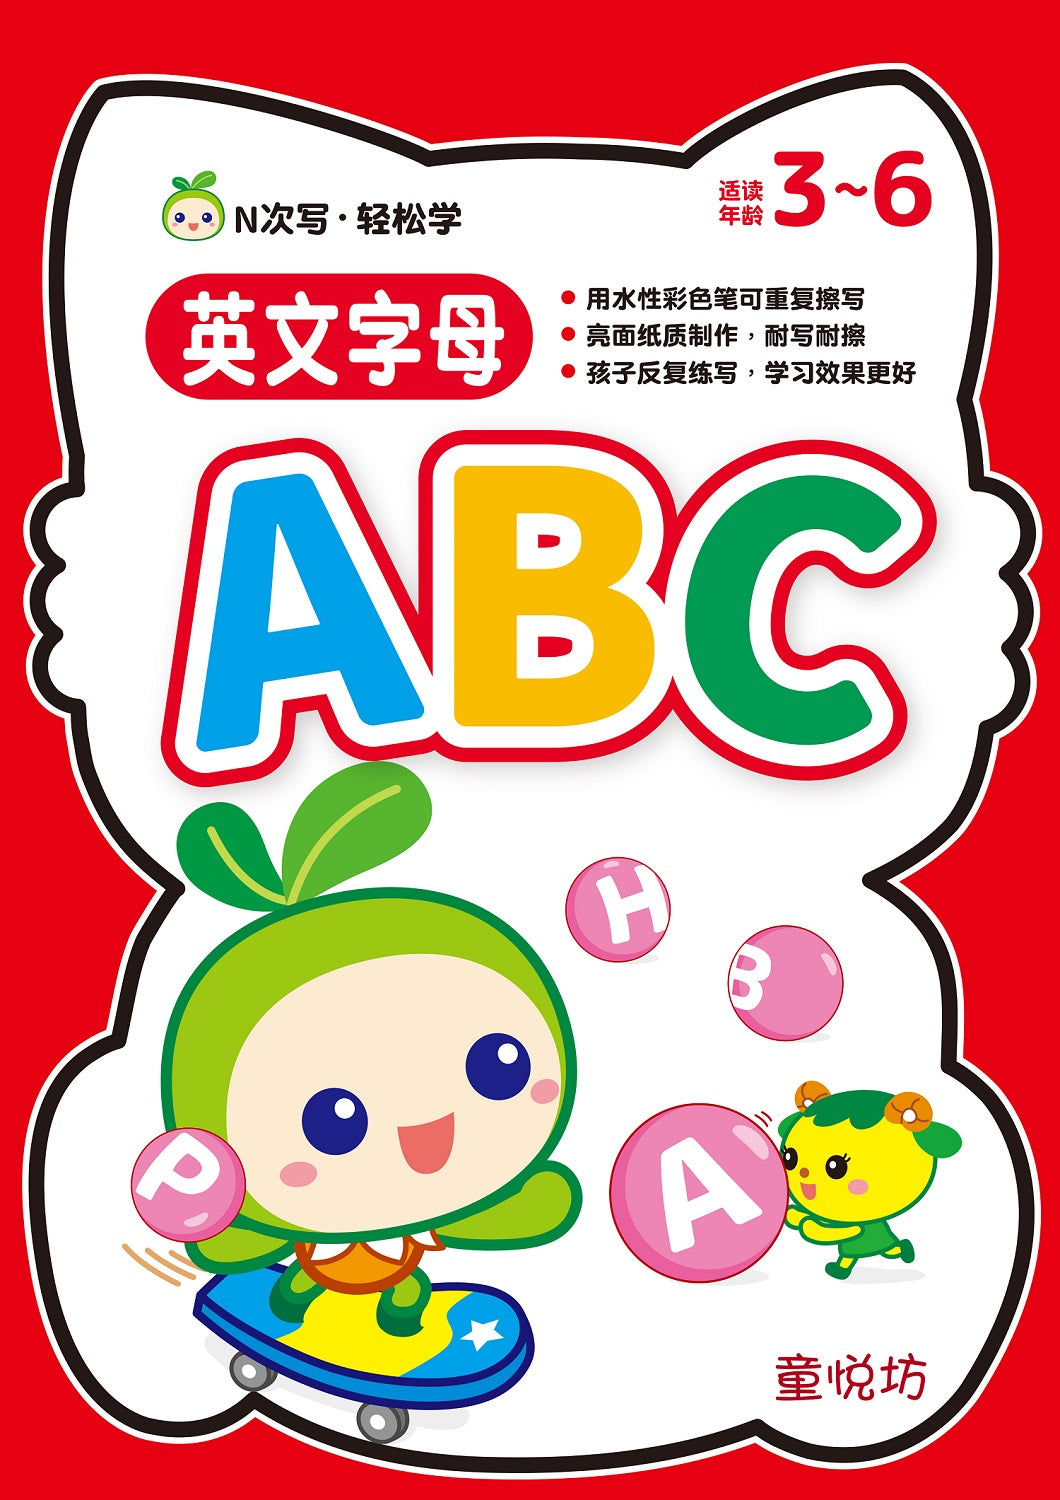 N次写轻松学:英文字母ABC - _MS, CHIN BATCH 1, 游戏/活动本